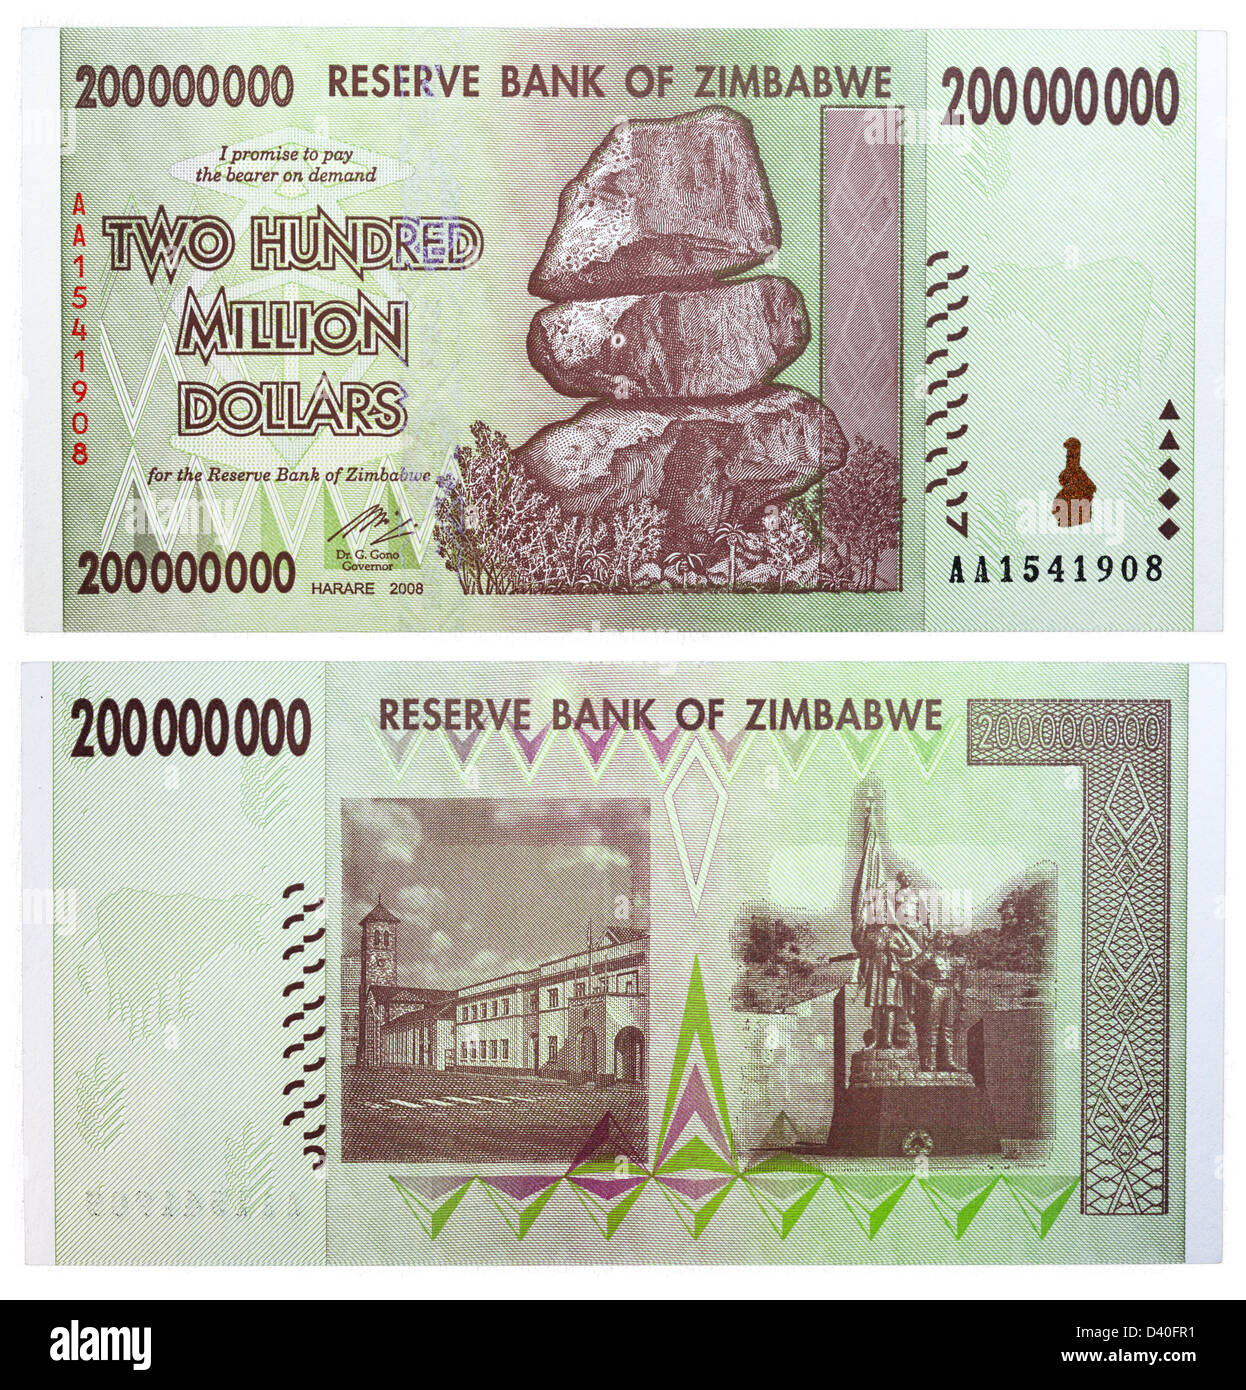 5 x Zimbabwe 100 Million Dollar Banknotes-paper money currency 